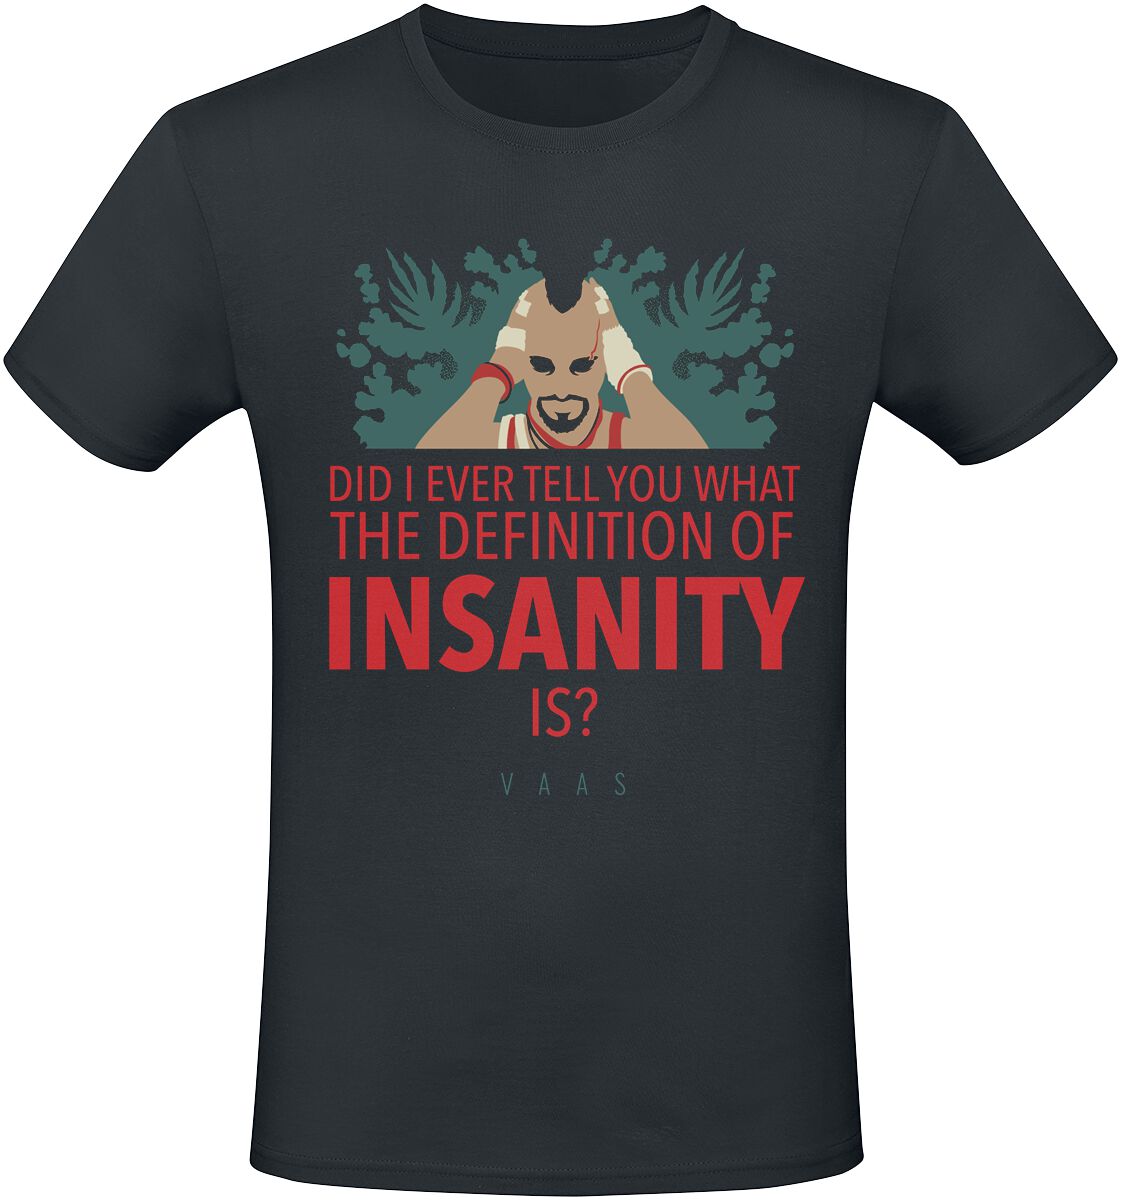 Far Cry Villains - Vaas - Insanity T-Shirt schwarz in S